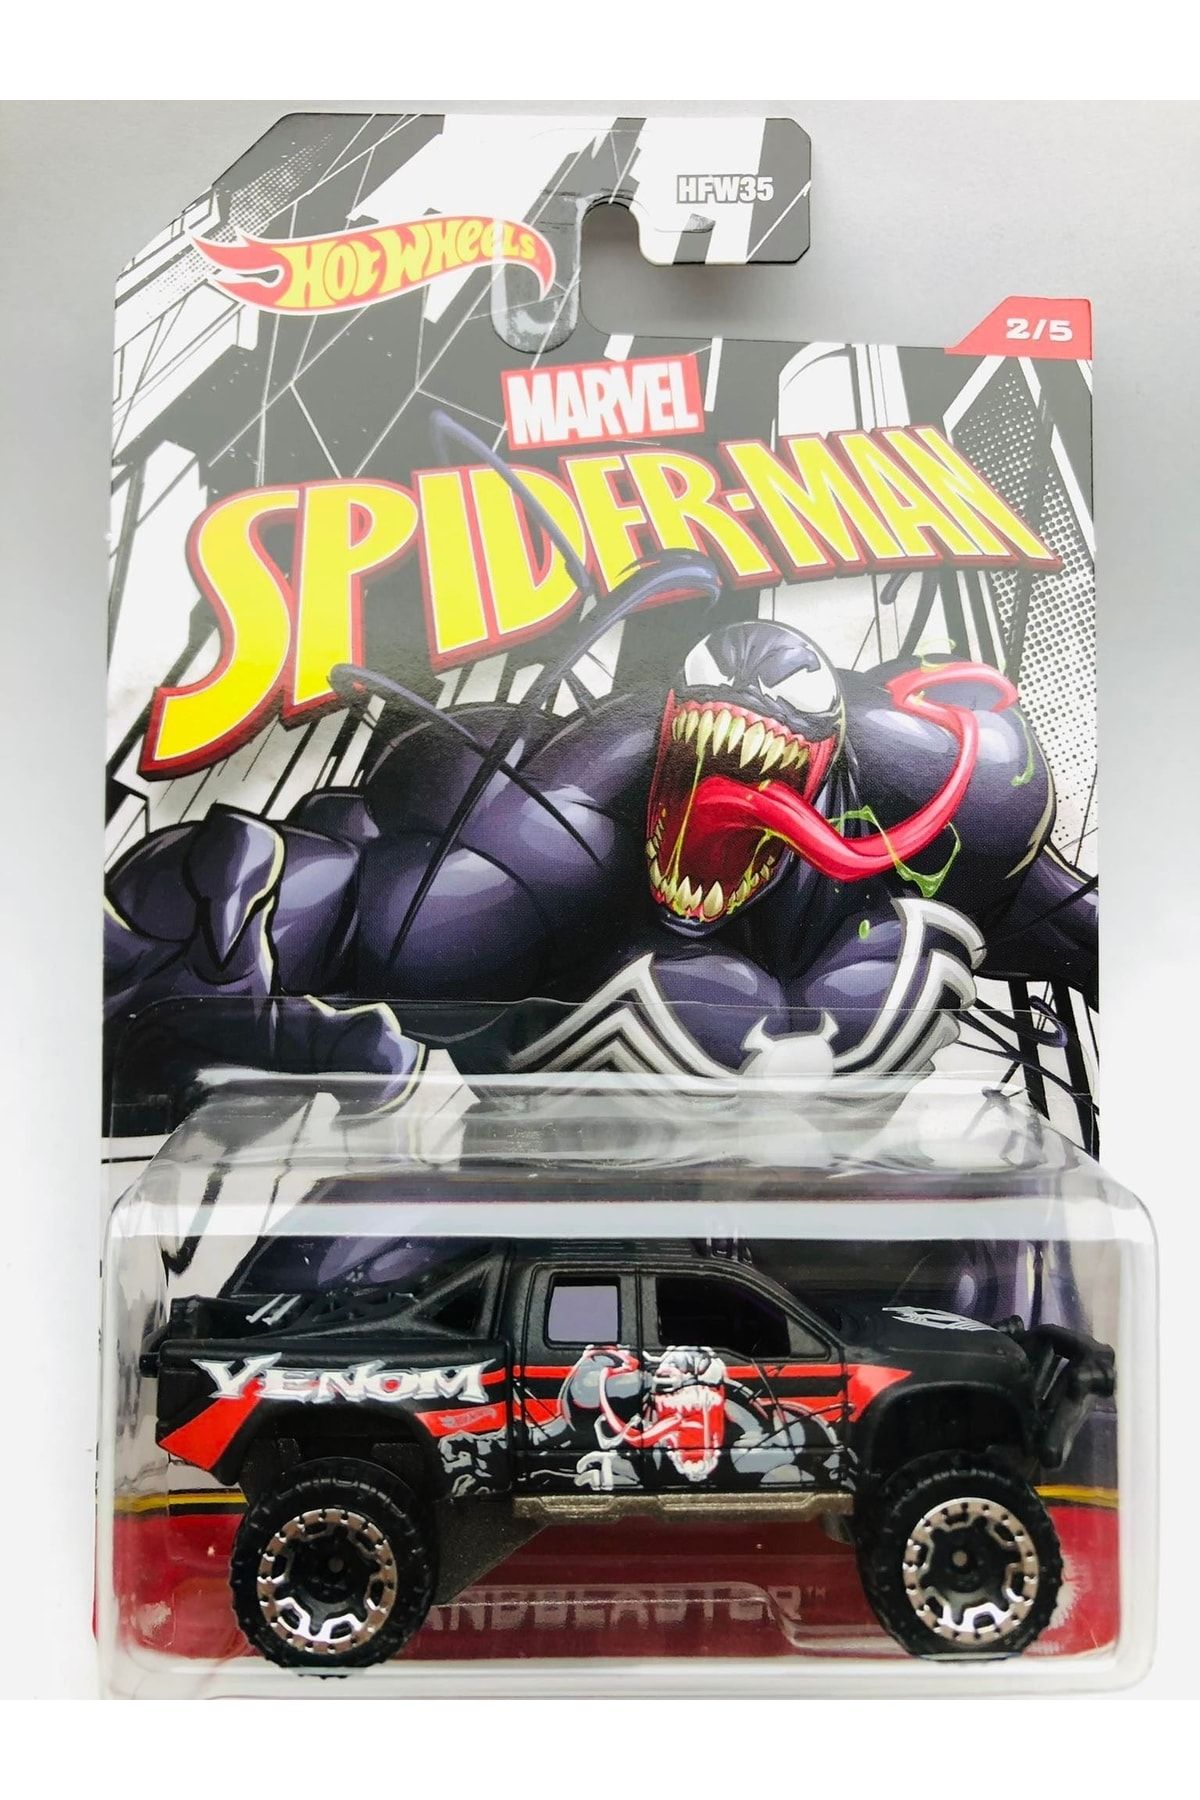 HOT WHEELS جدید - Marvel Spiderman Venom Sandblaster 1:64 Scale Hotwheels Brand Hfw35 2/5